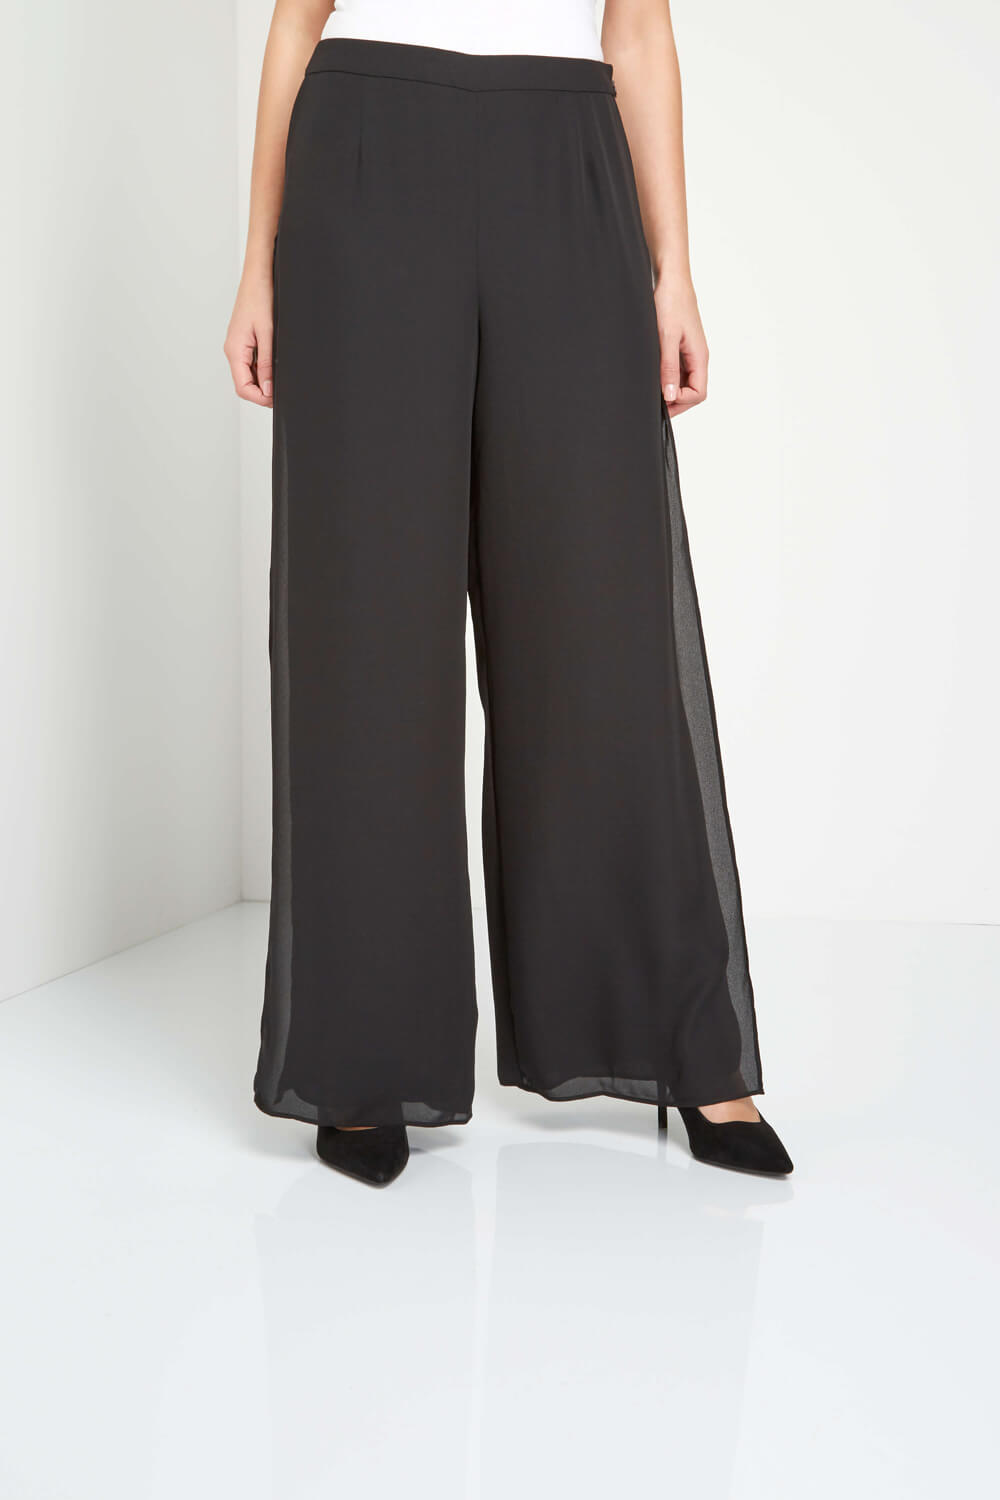 Black Side Split Trousers, Image 3 of 5